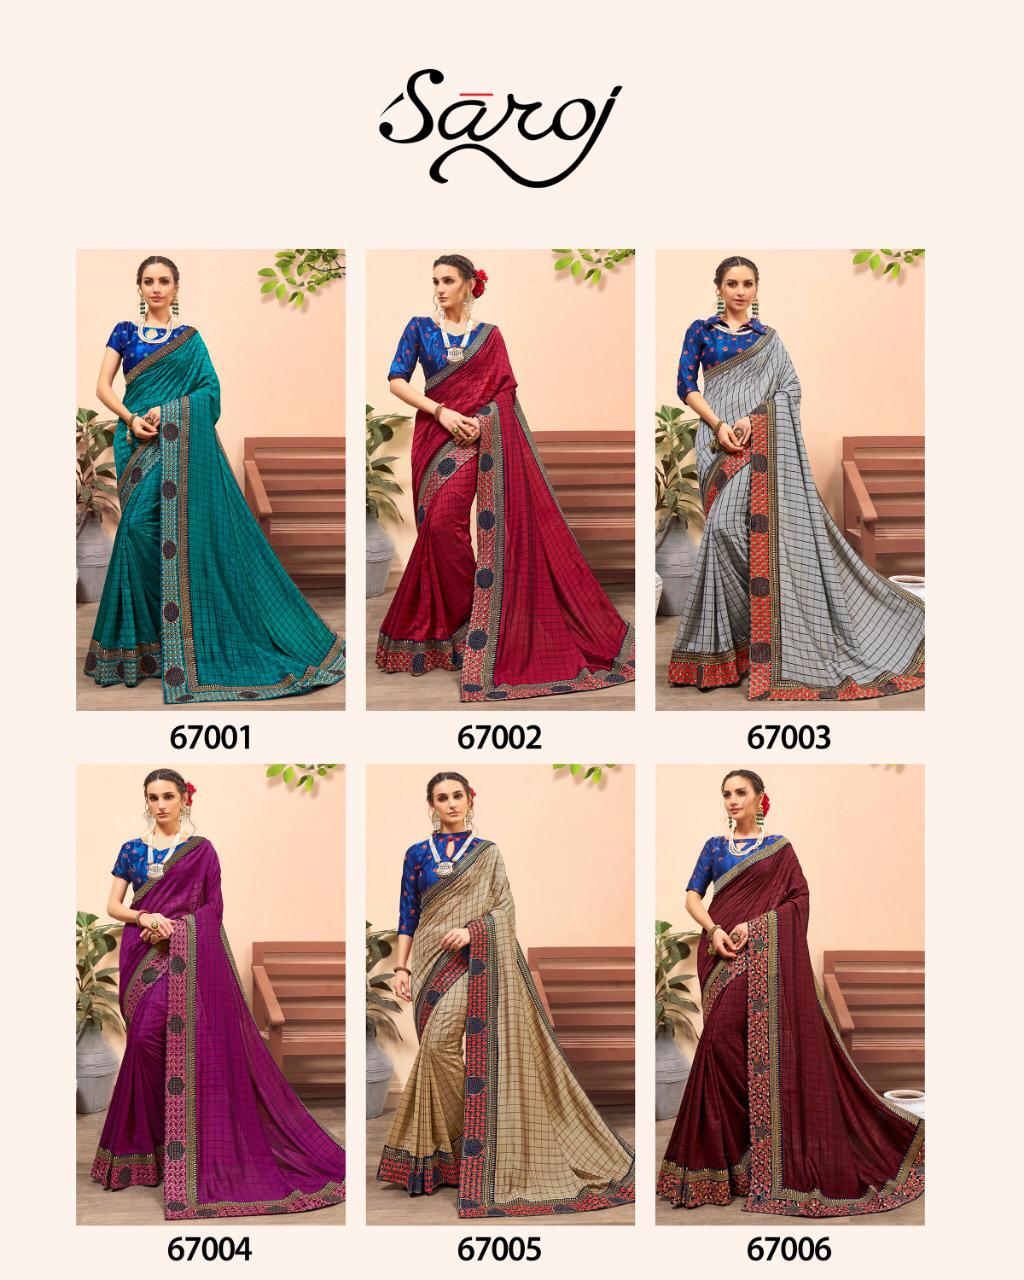 Saroj nakshita beautifully designed border sarees in factory price